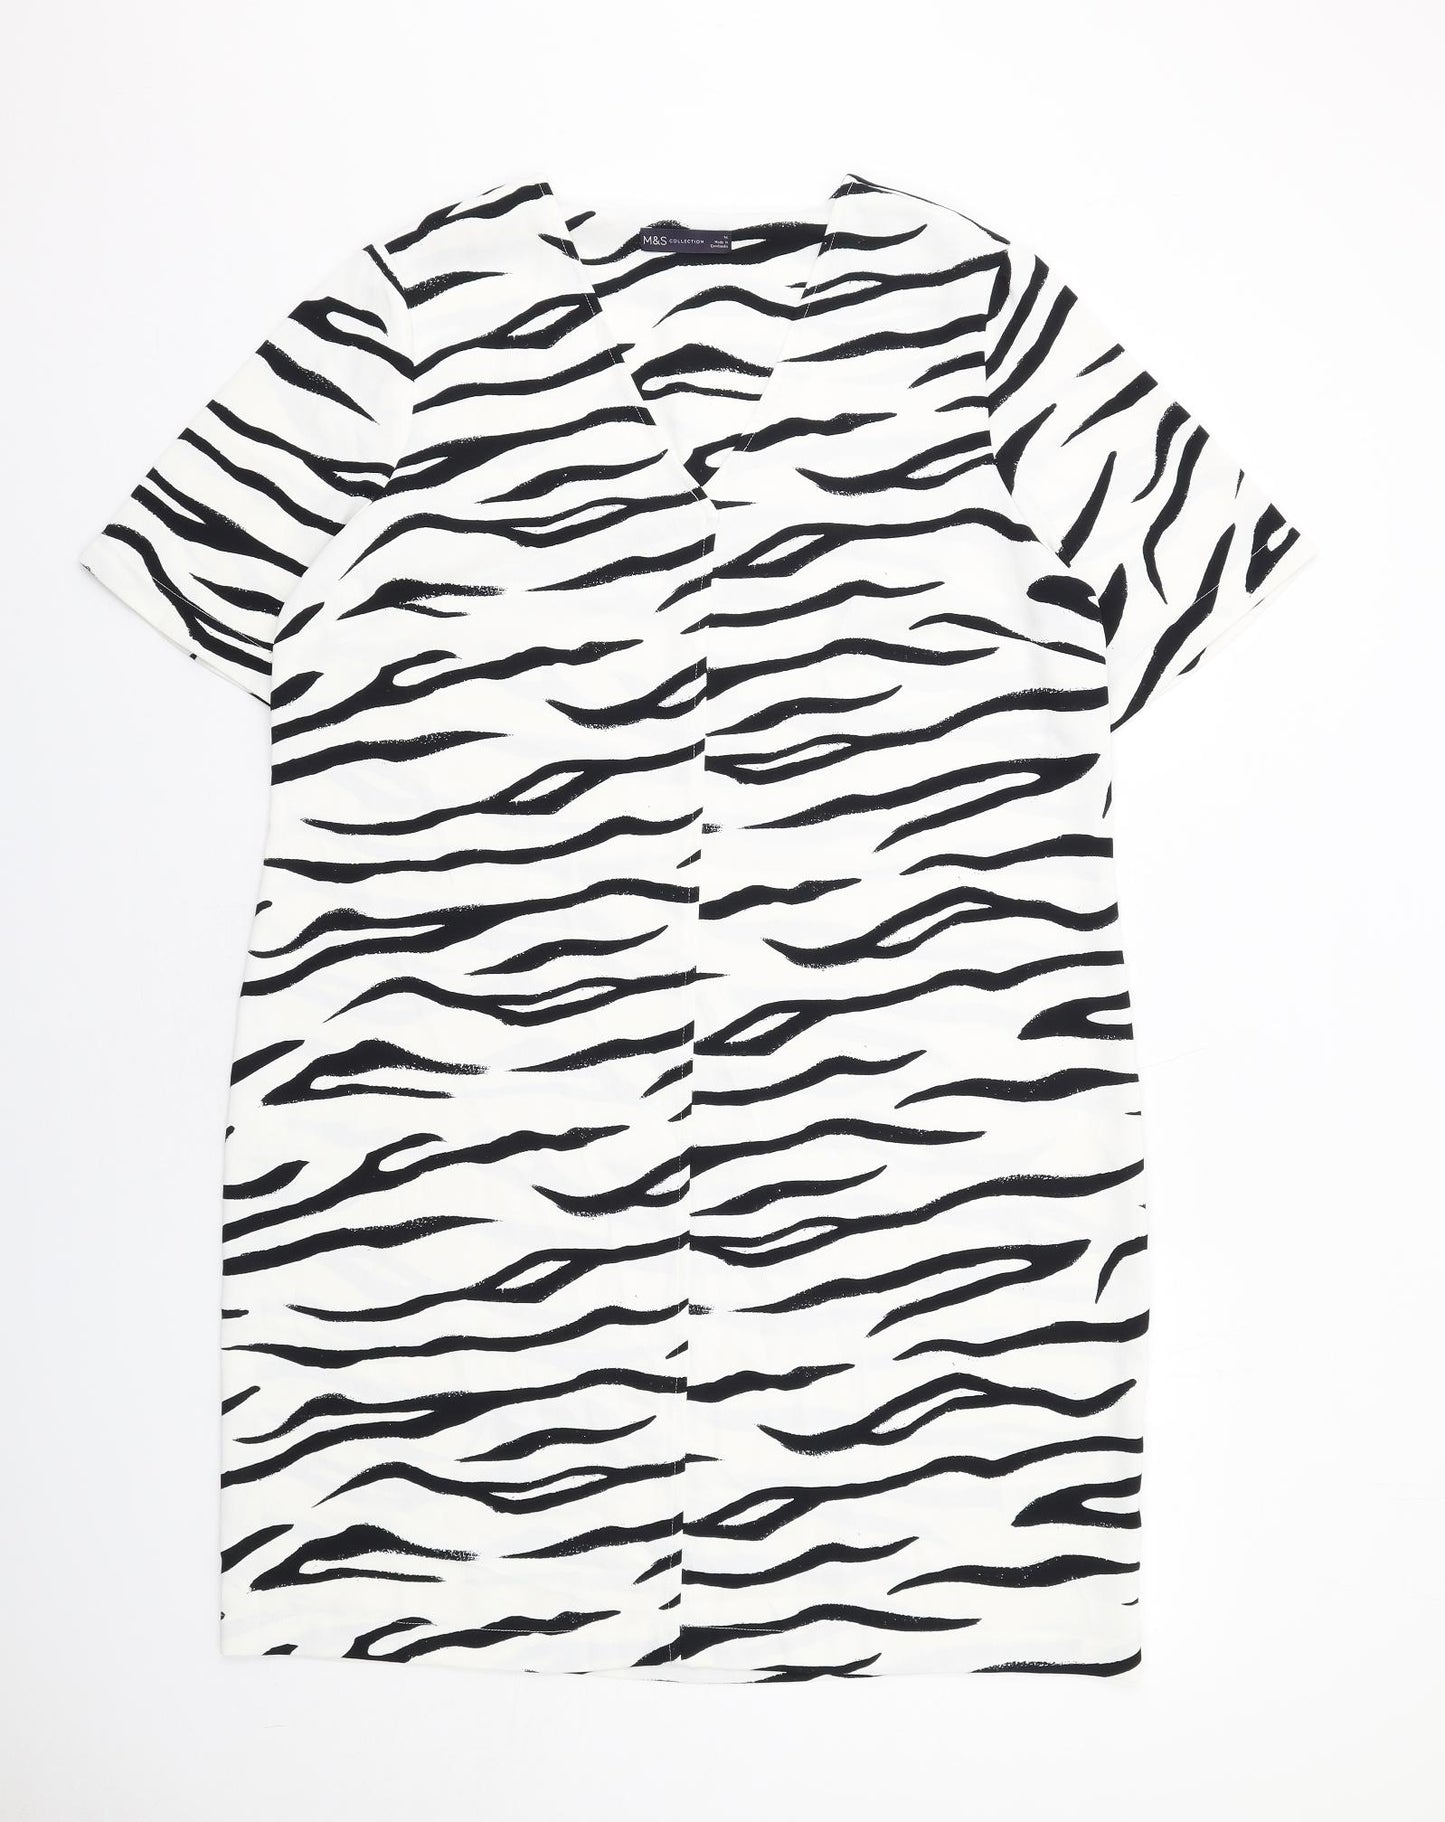 Marks and Spencer Womens White Animal Print Polyester A-Line Size 14 V-Neck Pullover - Zebra Pattern